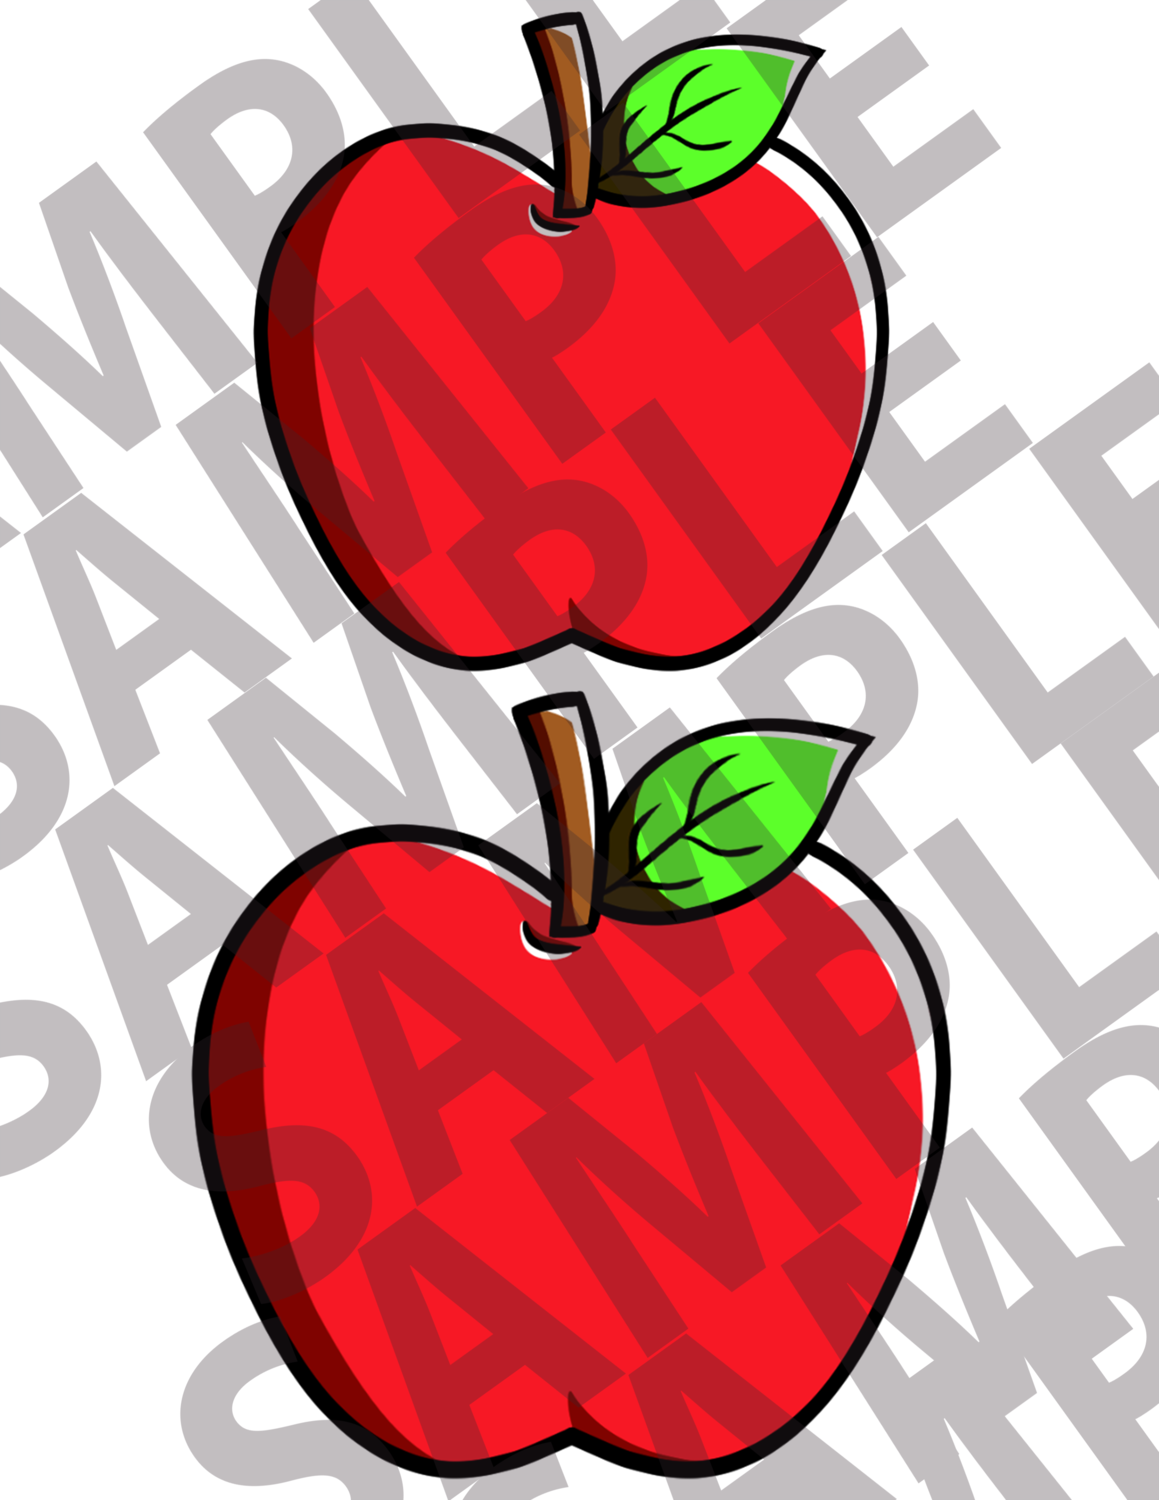 Big Red Apples